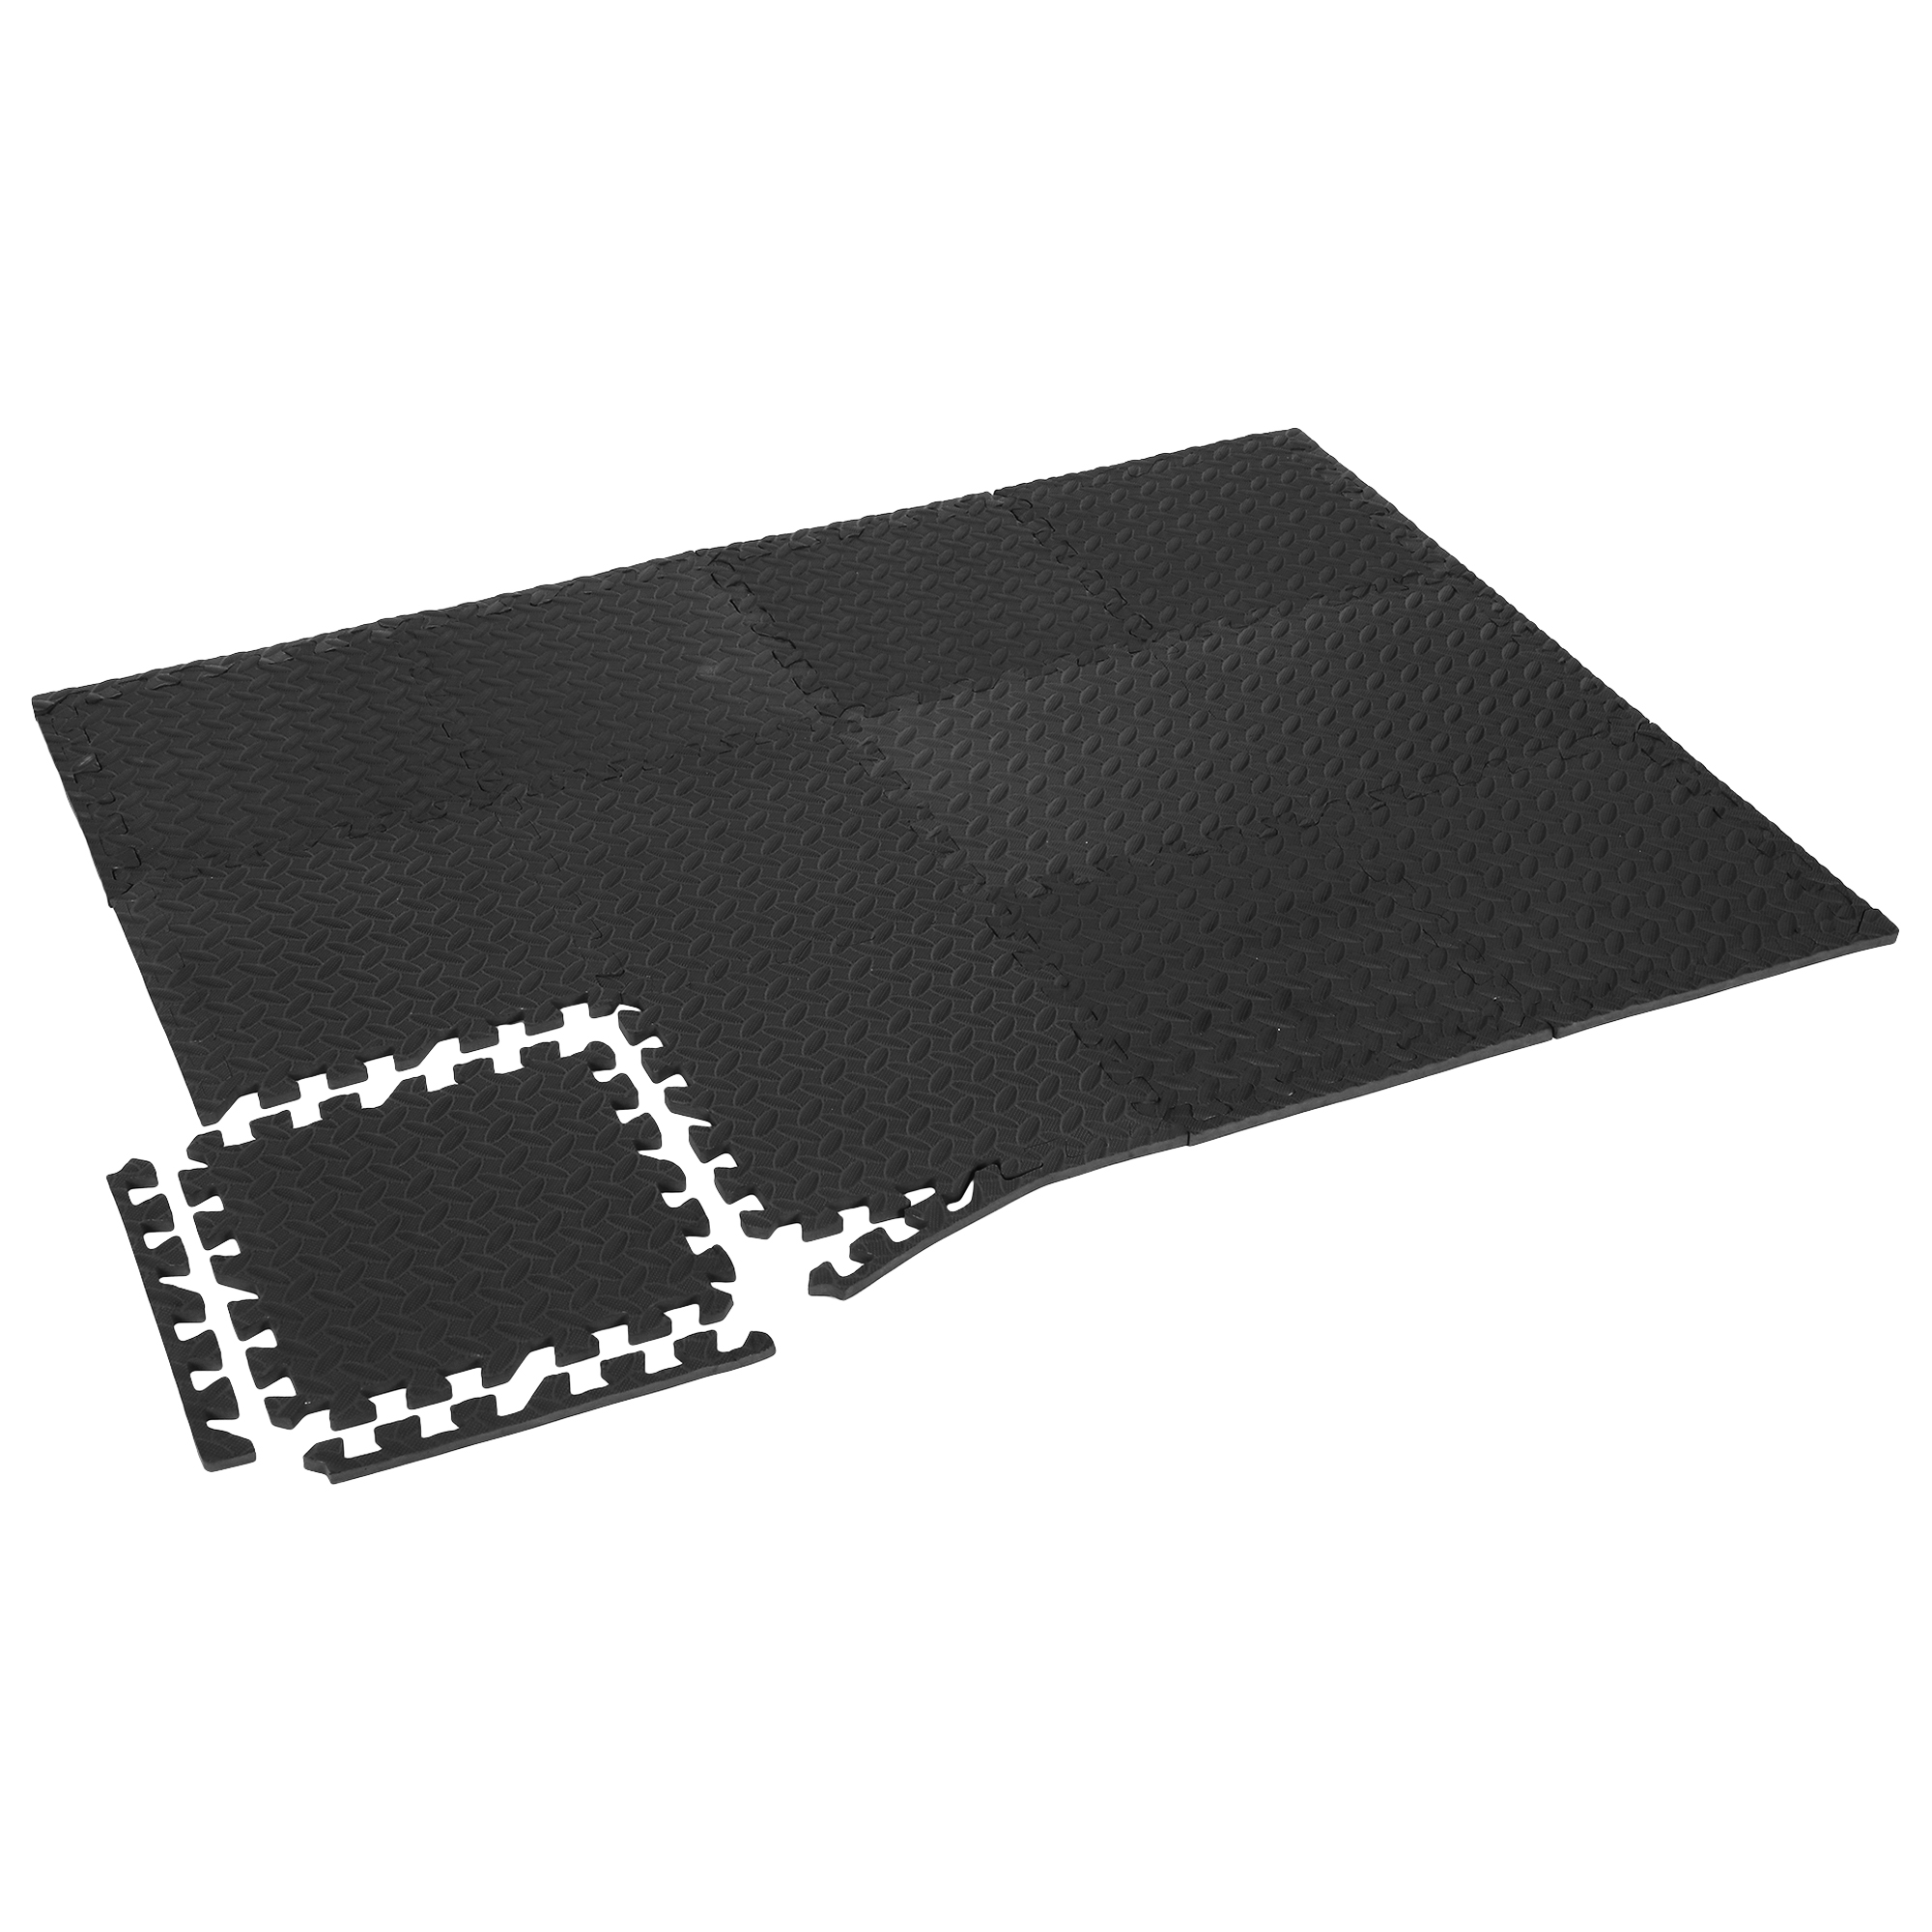 SAYFUT 1-200PCS EVA Foam Floor Tiles for Home Gym, Mat for Home Workout Equipment, Floor Padding for Kids - image 4 of 6